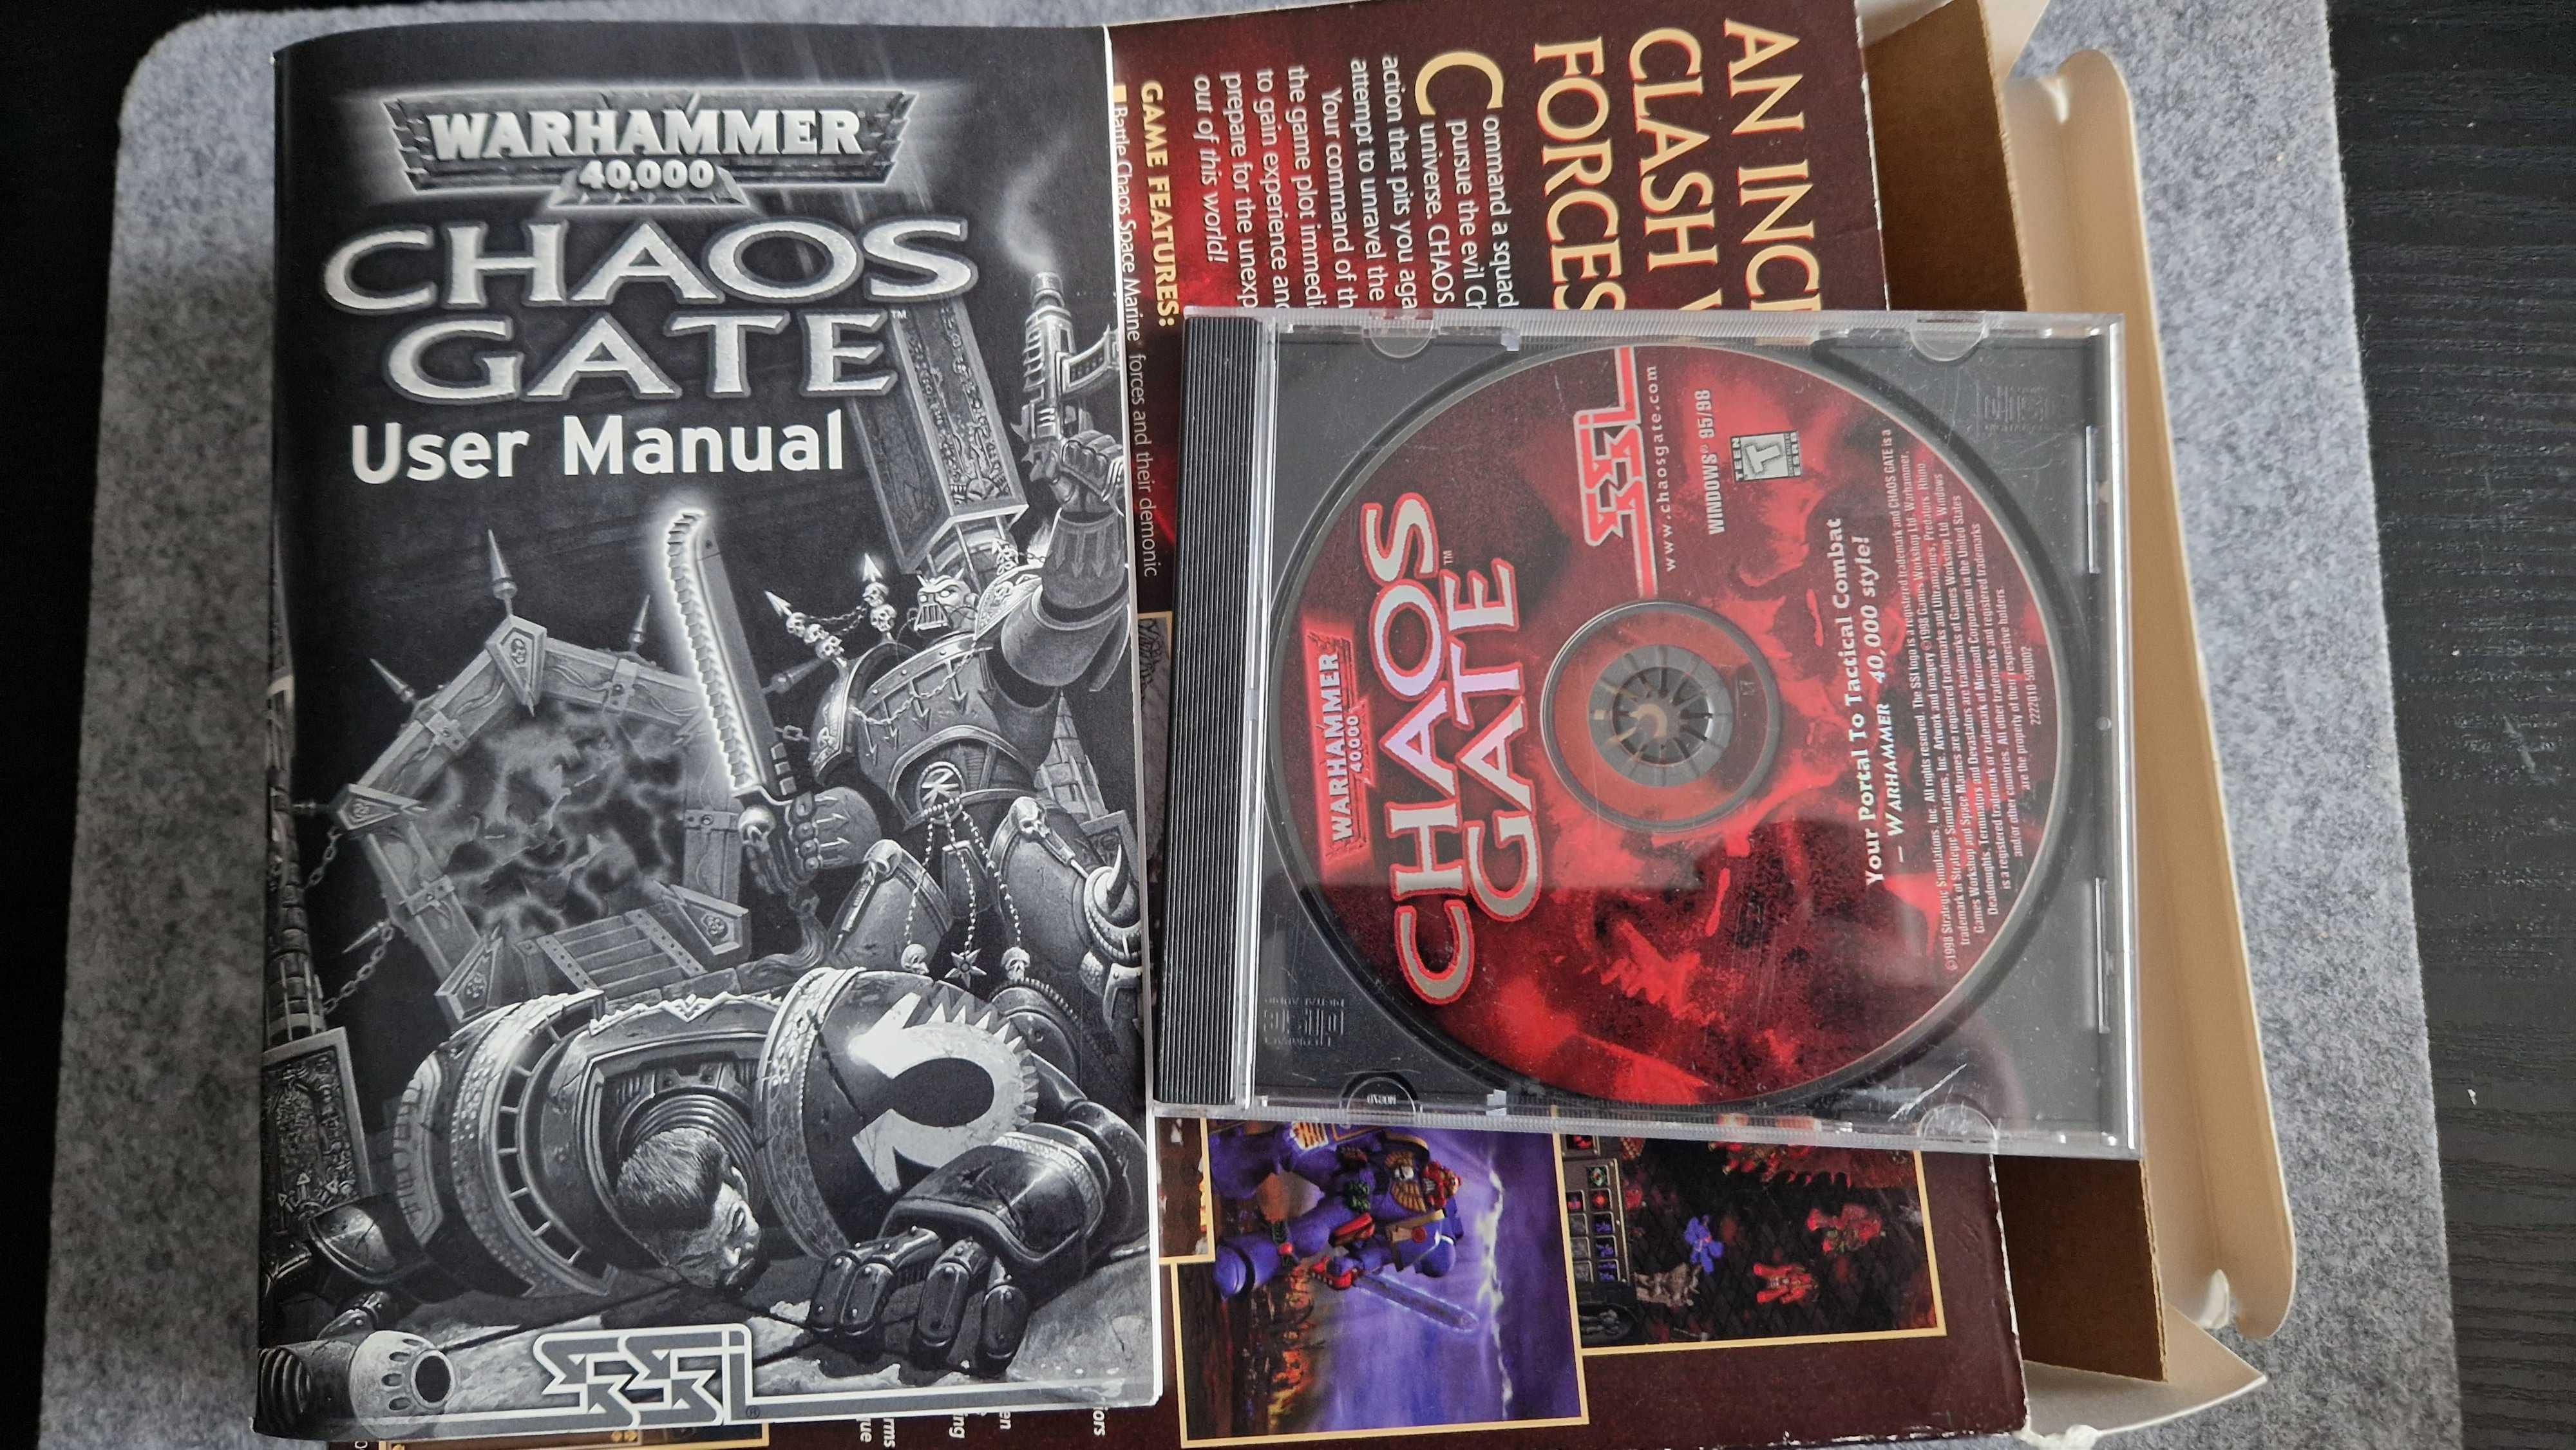 PC box Warhammer chaos gate wydanie USA